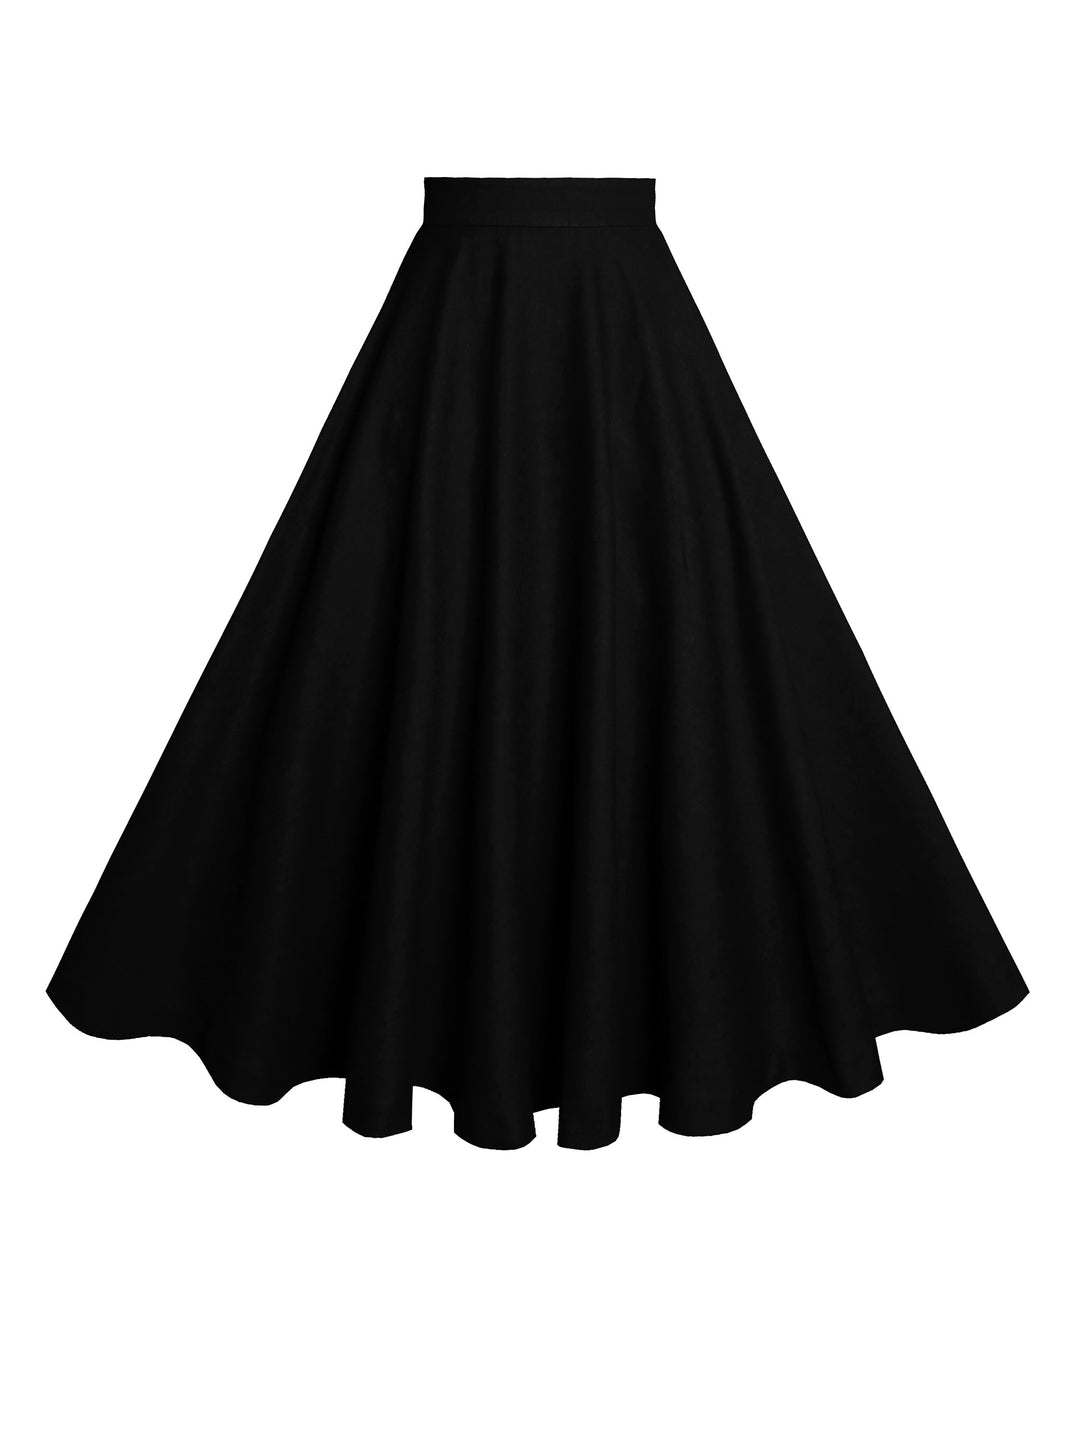 MTO - Lindy Skirt in Midnight Black Linen